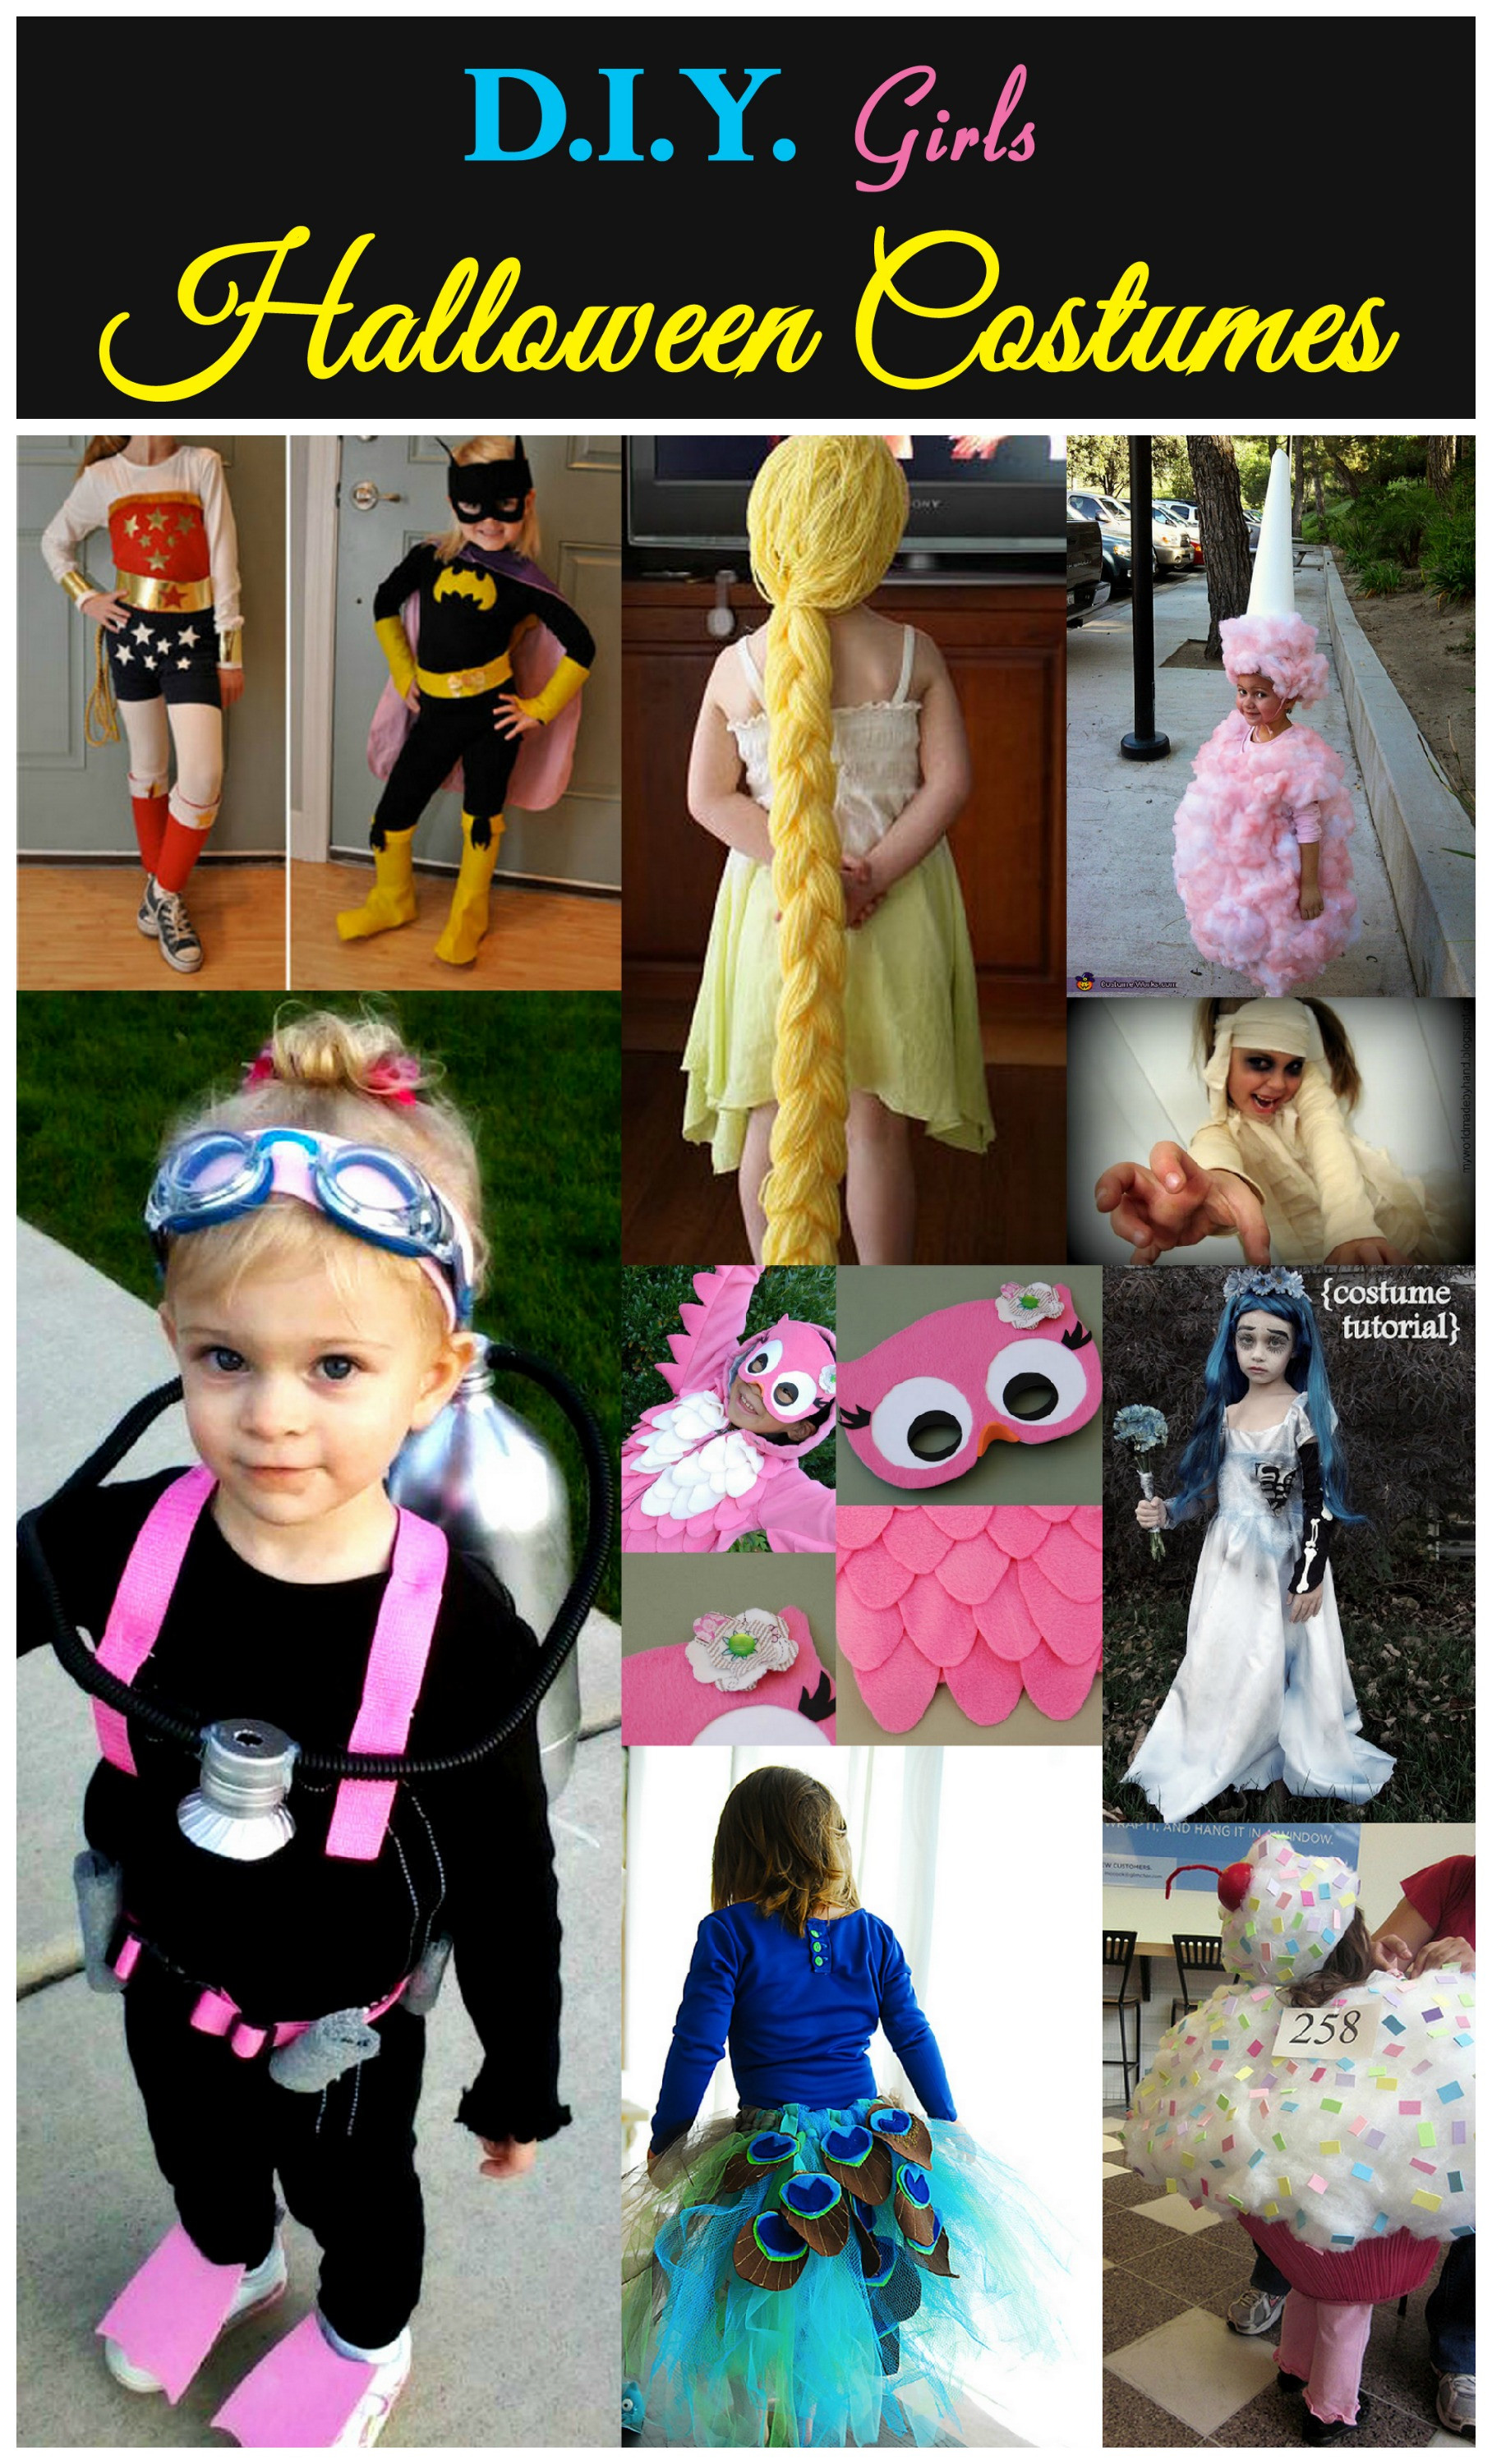 Best ideas about Girls DIY Halloween Costumes
. Save or Pin D I Y Girls Halloween Costumes Now.